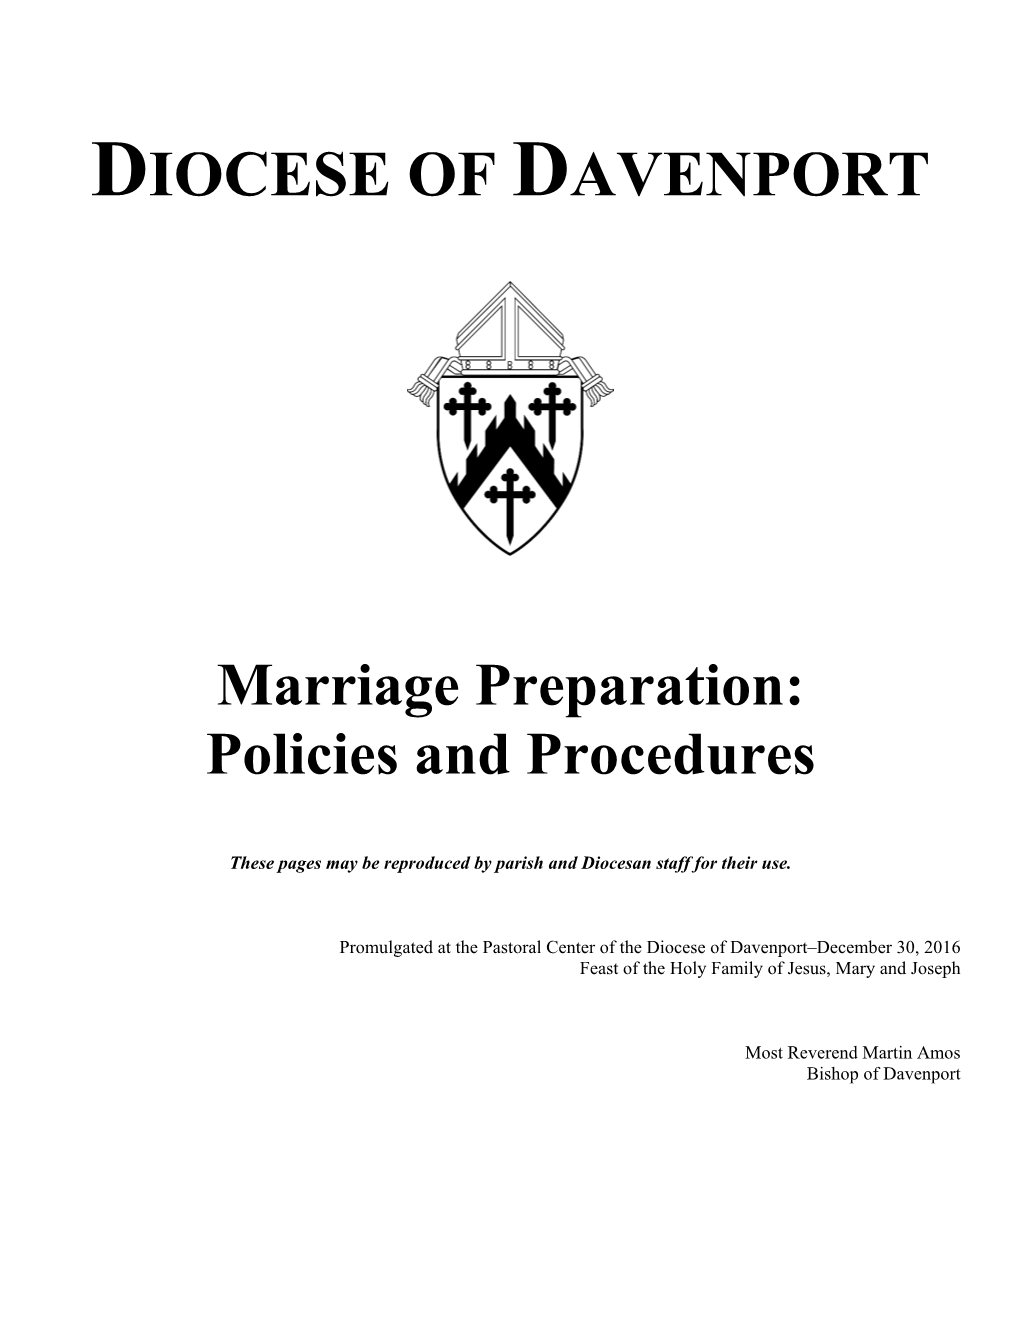 Marriage Preparation: Policies and Procedures